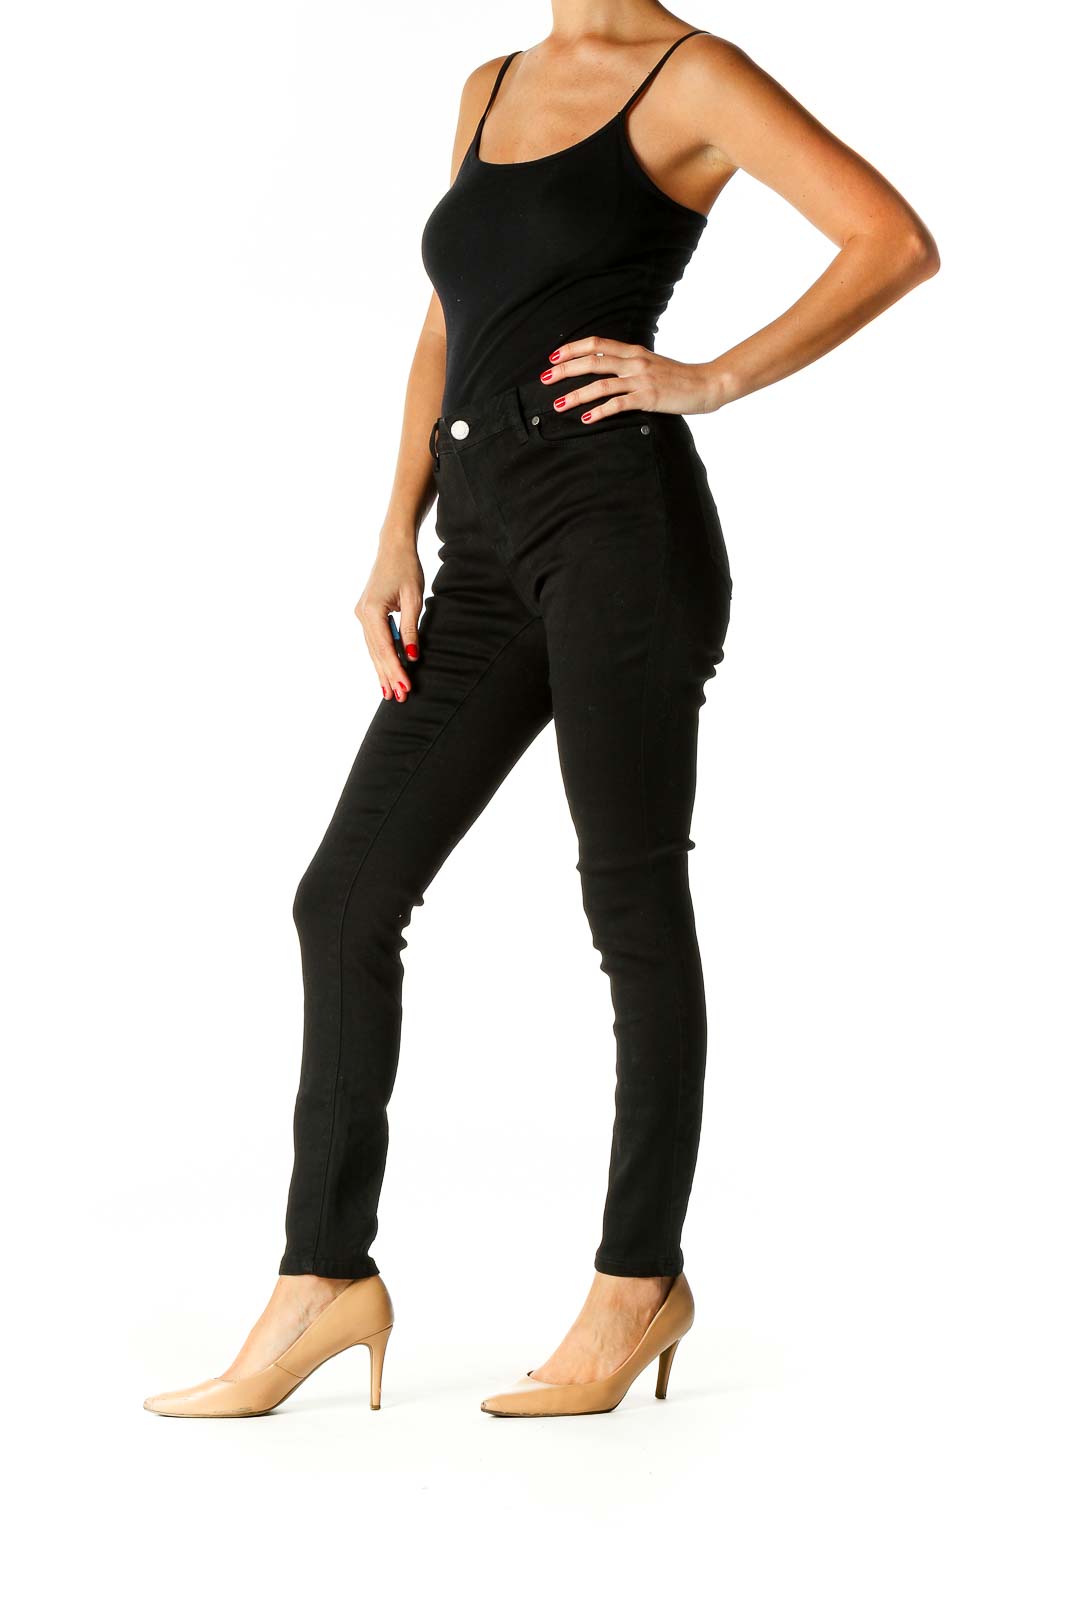 Simply Vera Vera Wang - Black Skinny Jeans Polyester Cotton